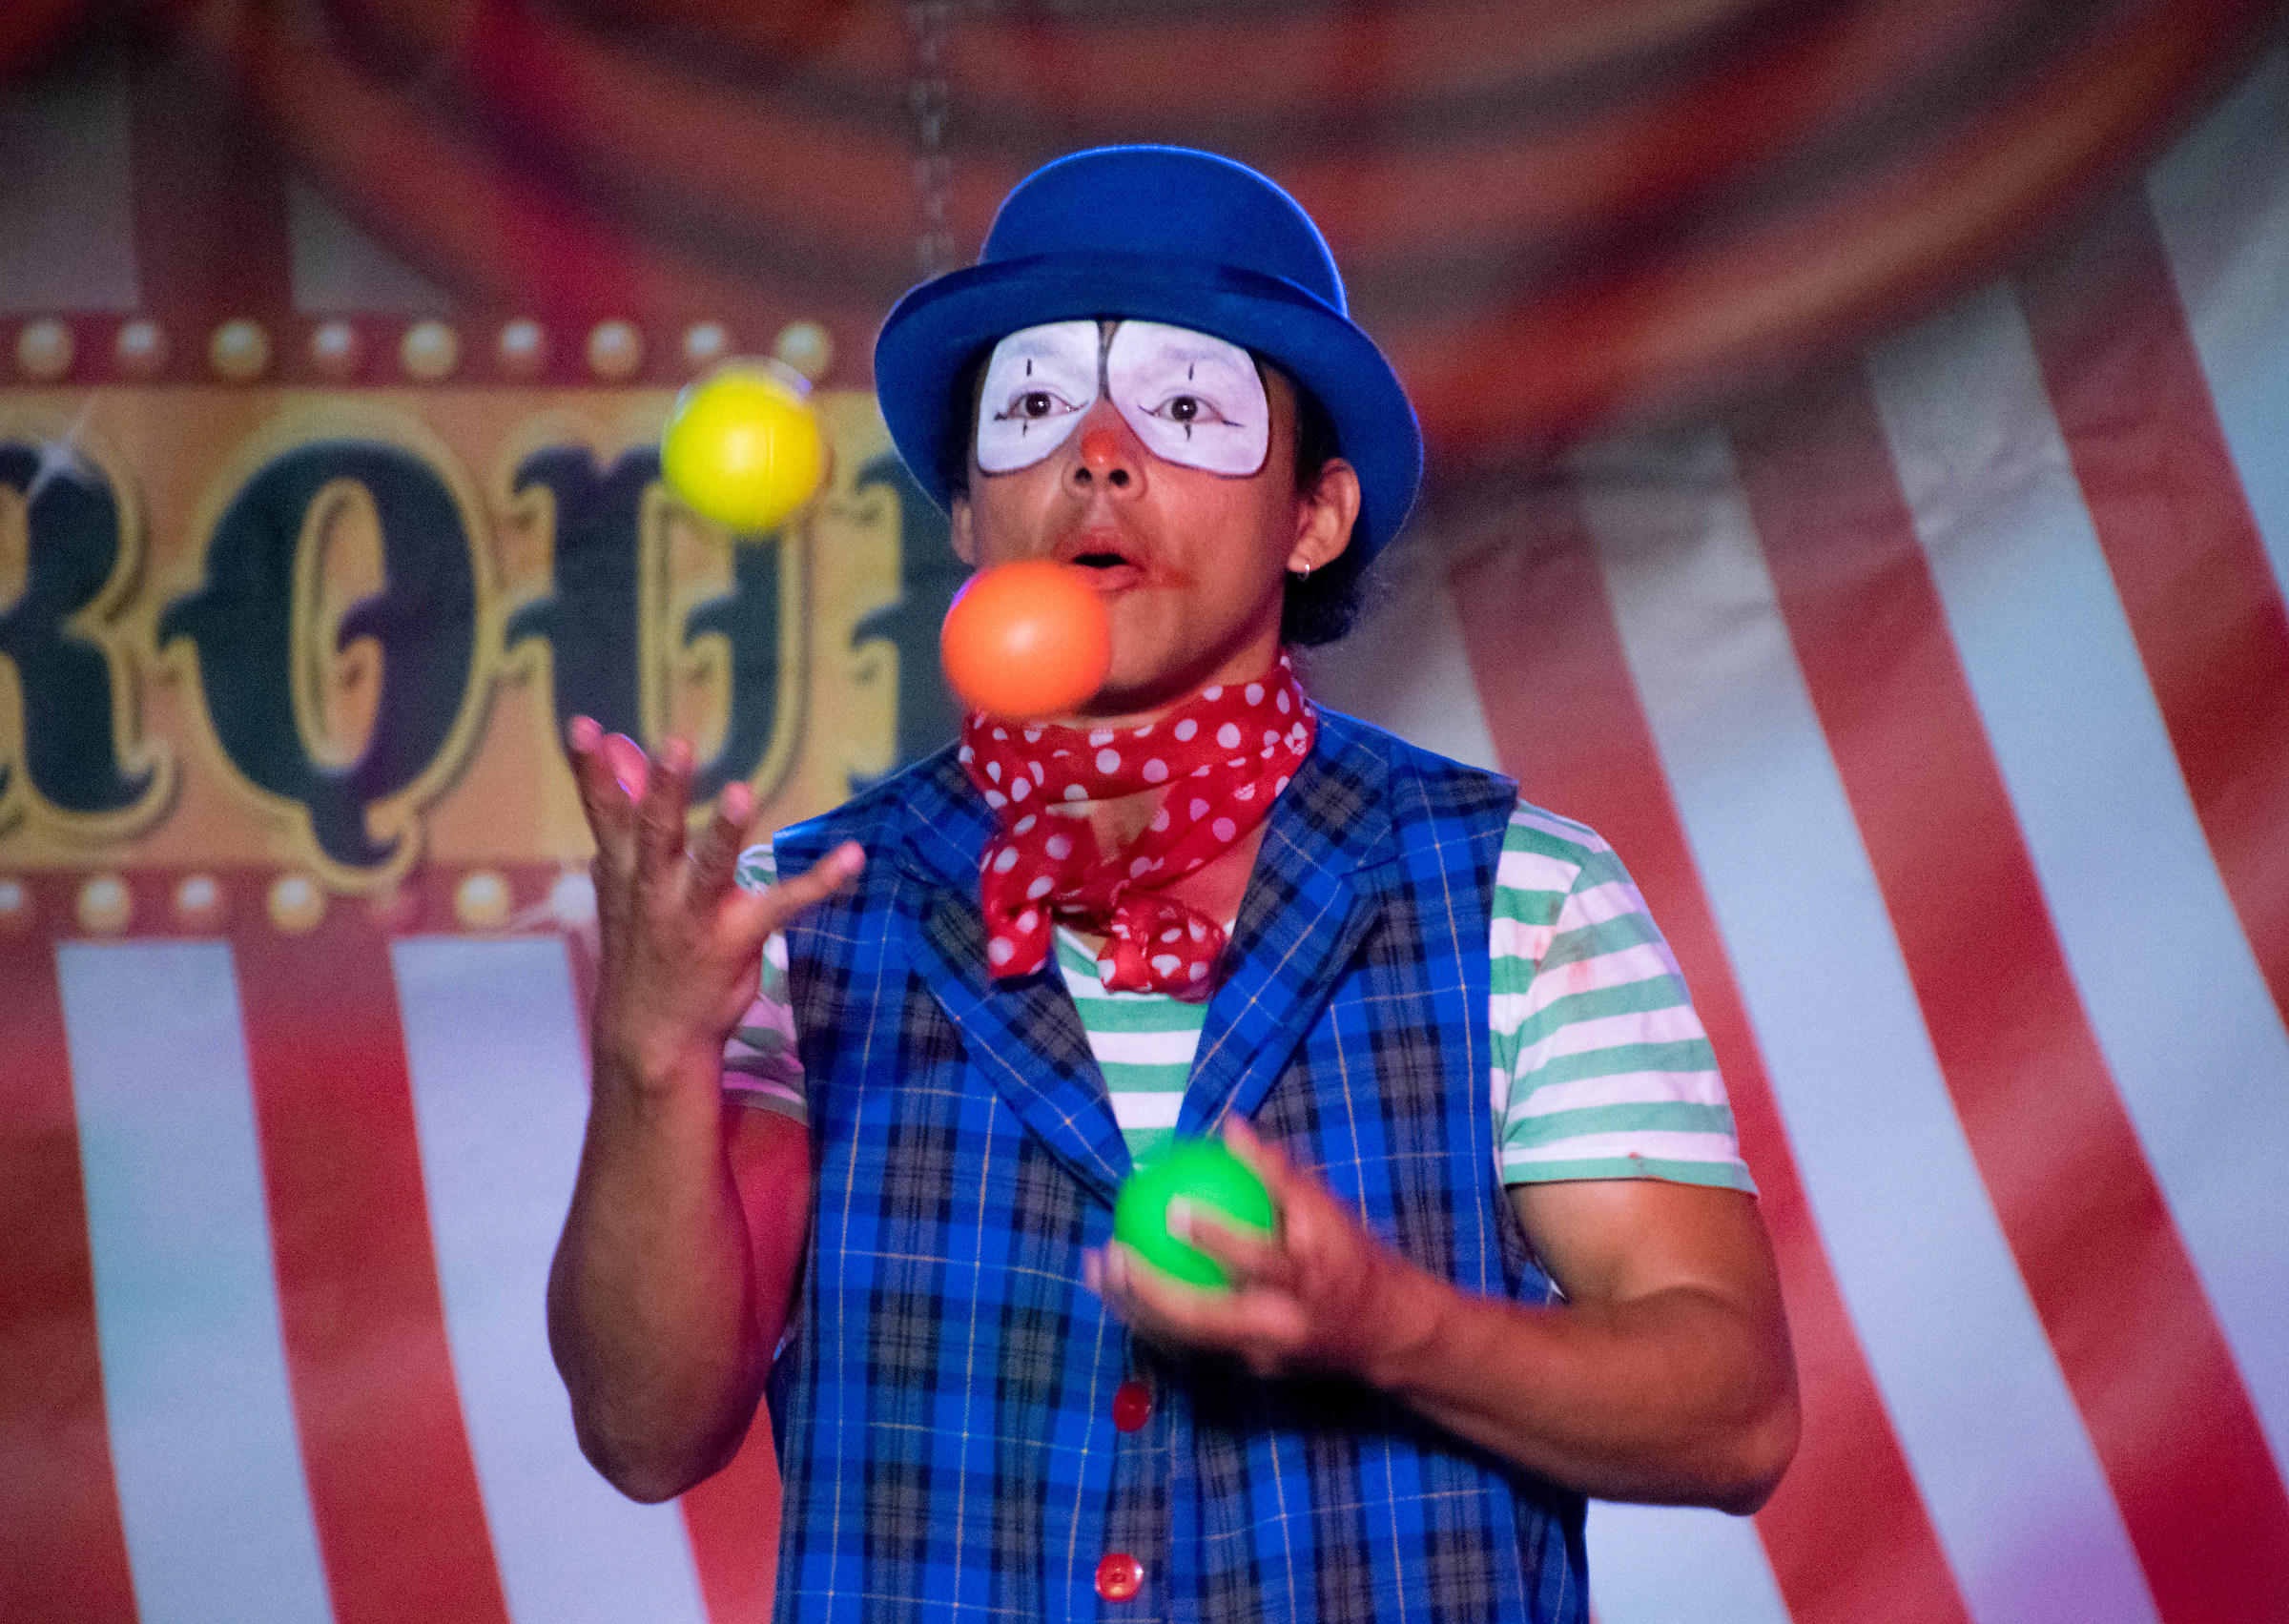 The Juggling Clown...